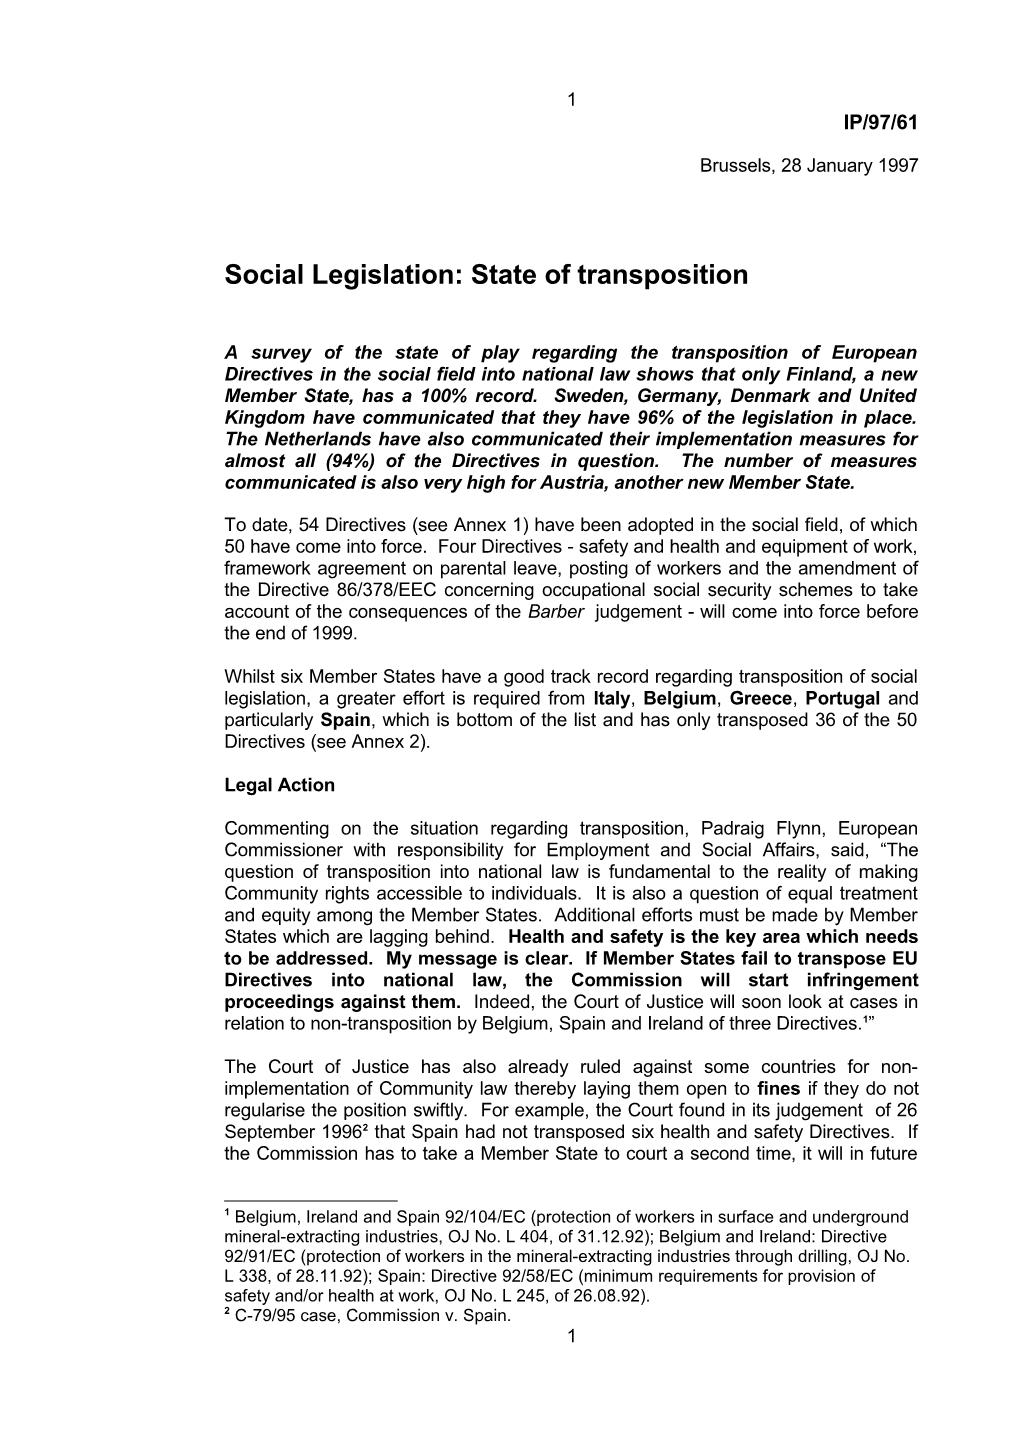 Social Legislation: State of Transposition